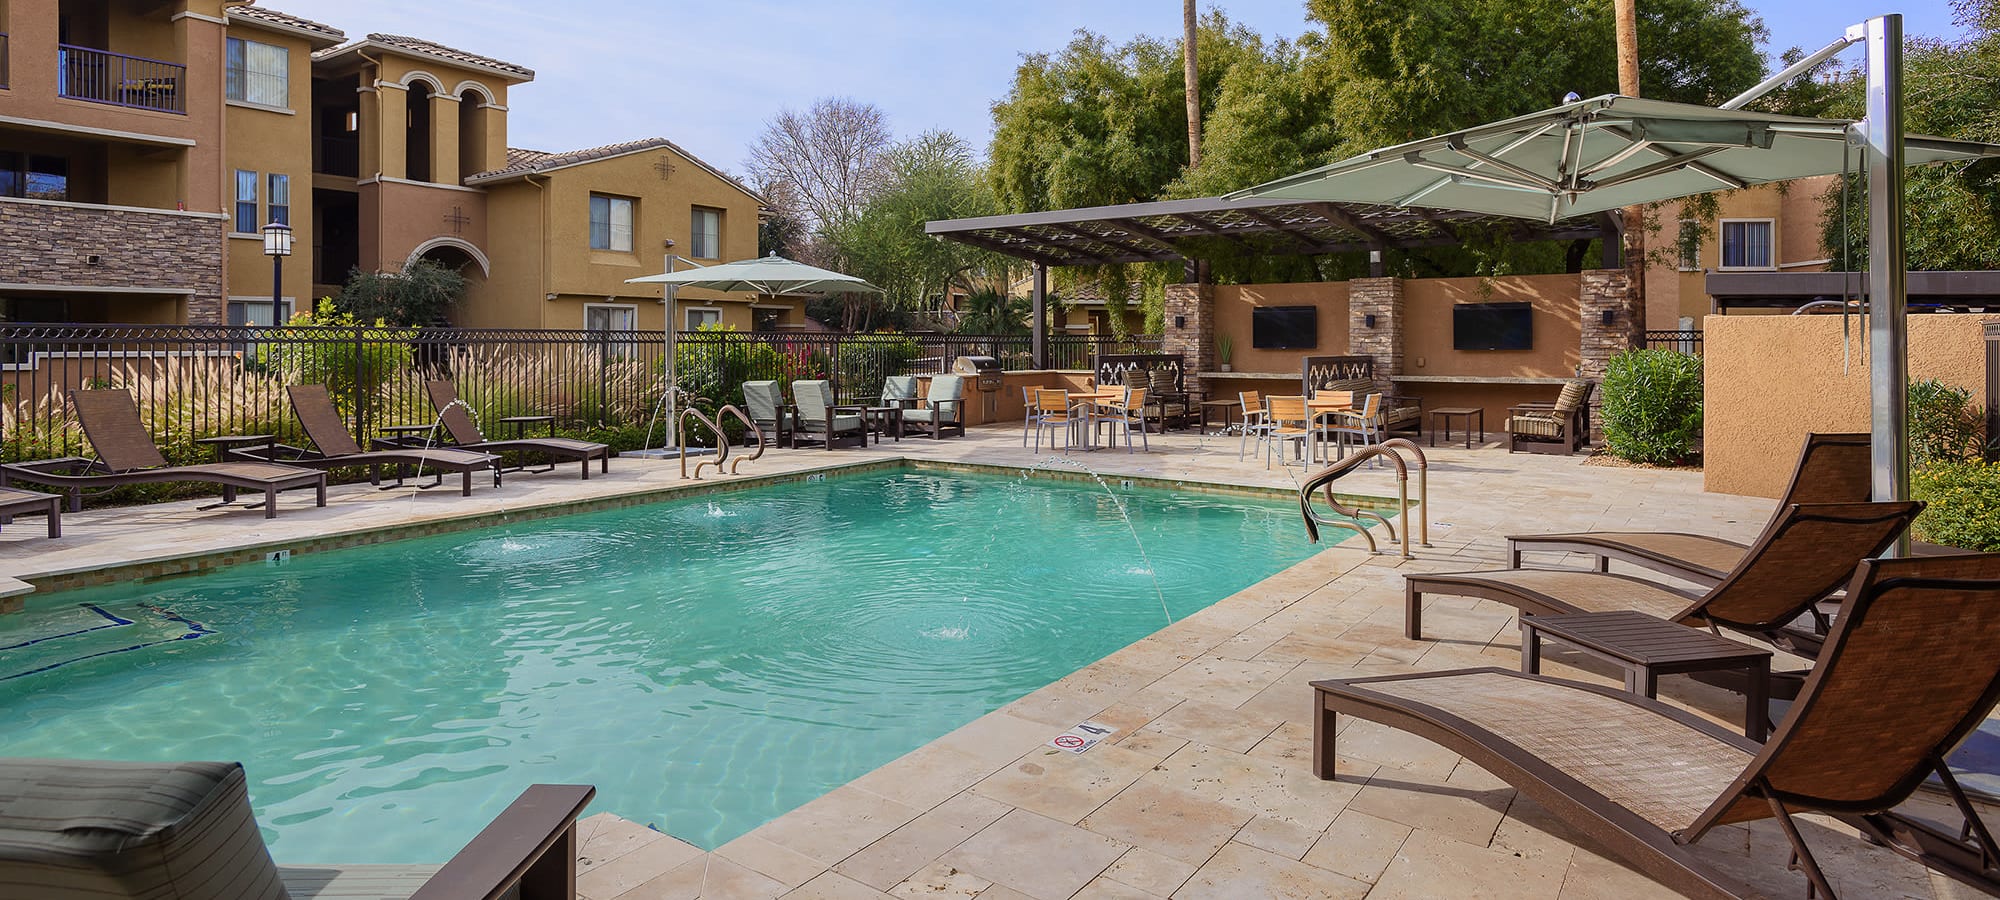 Luxury pool at Stone Oaks in Chandler, Arizona